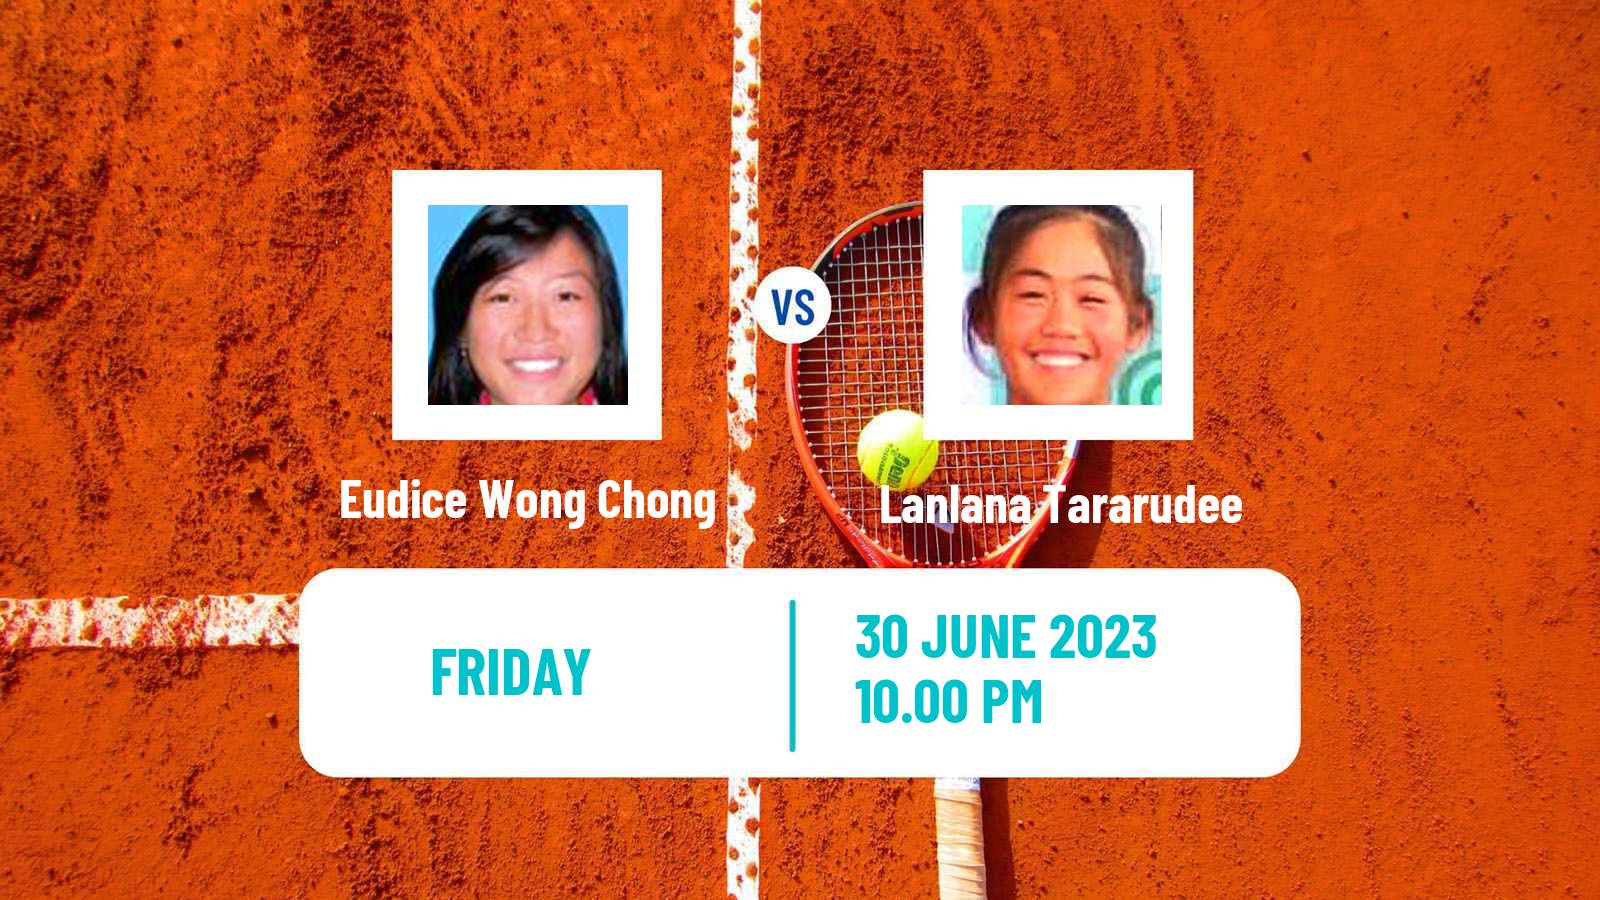 Tennis ITF W25 Hong Kong Women Eudice Wong Chong - Lanlana Tararudee